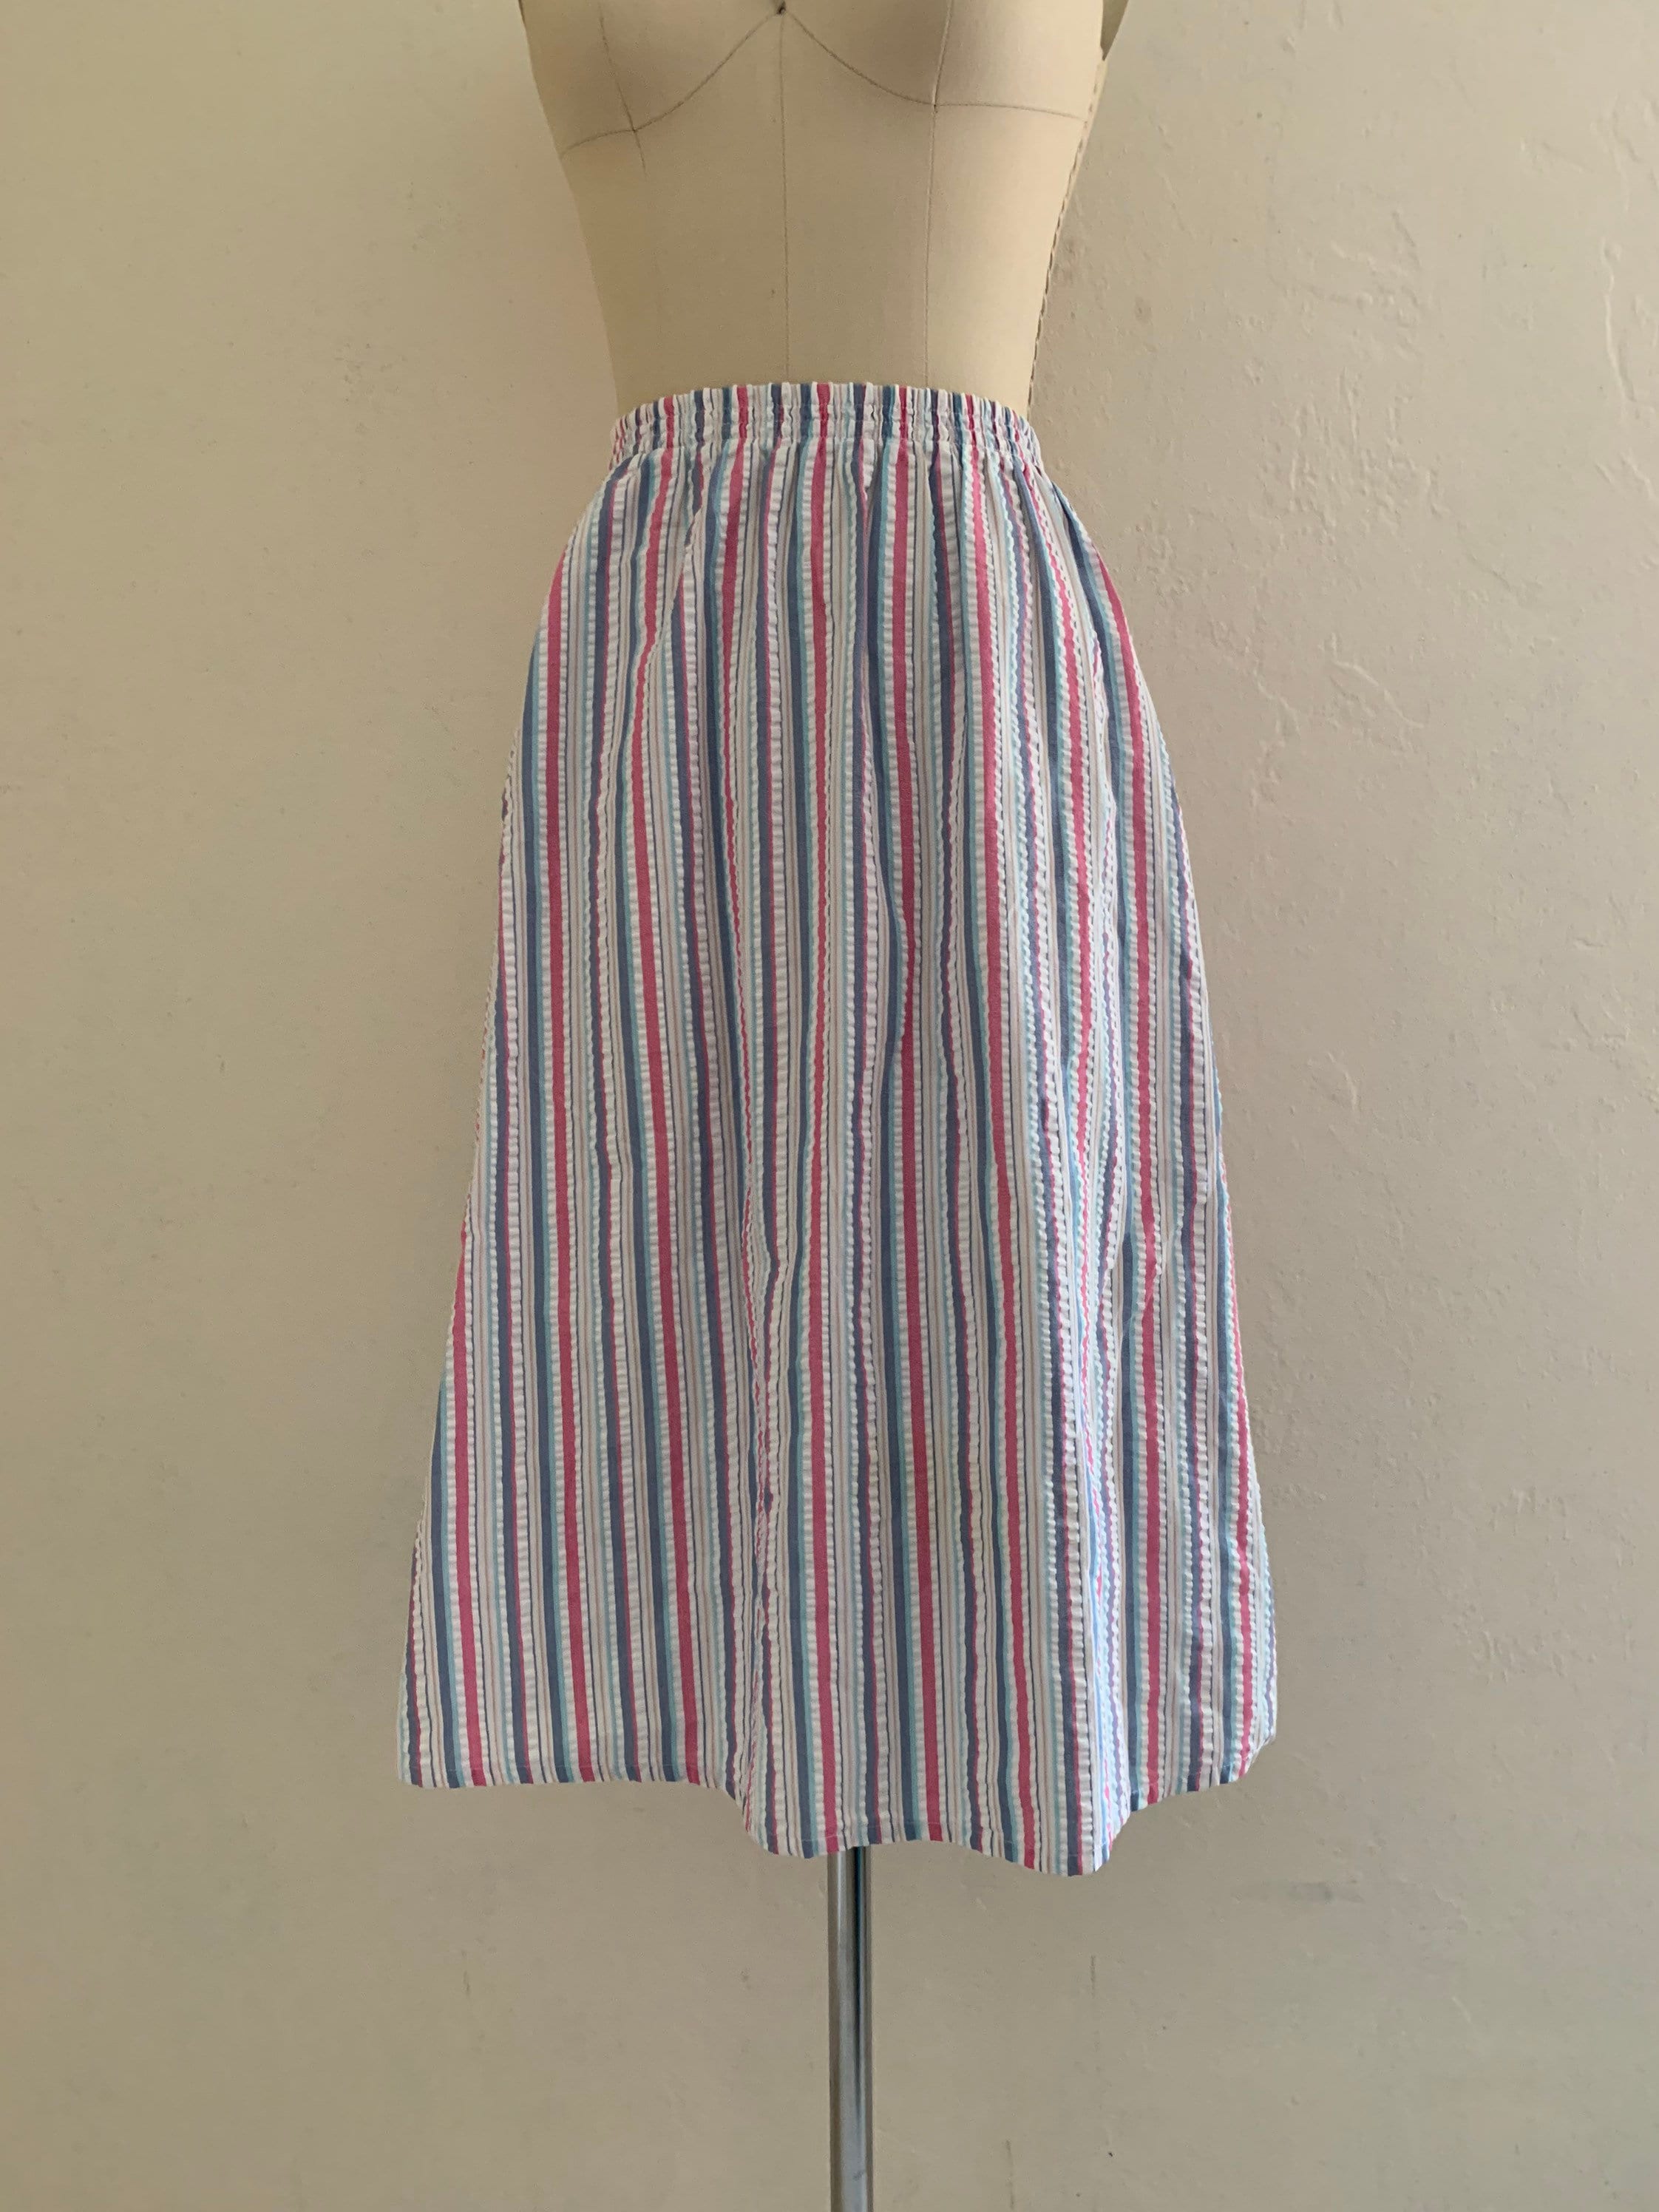 vintage 70's striped seersucker skirt with pockets